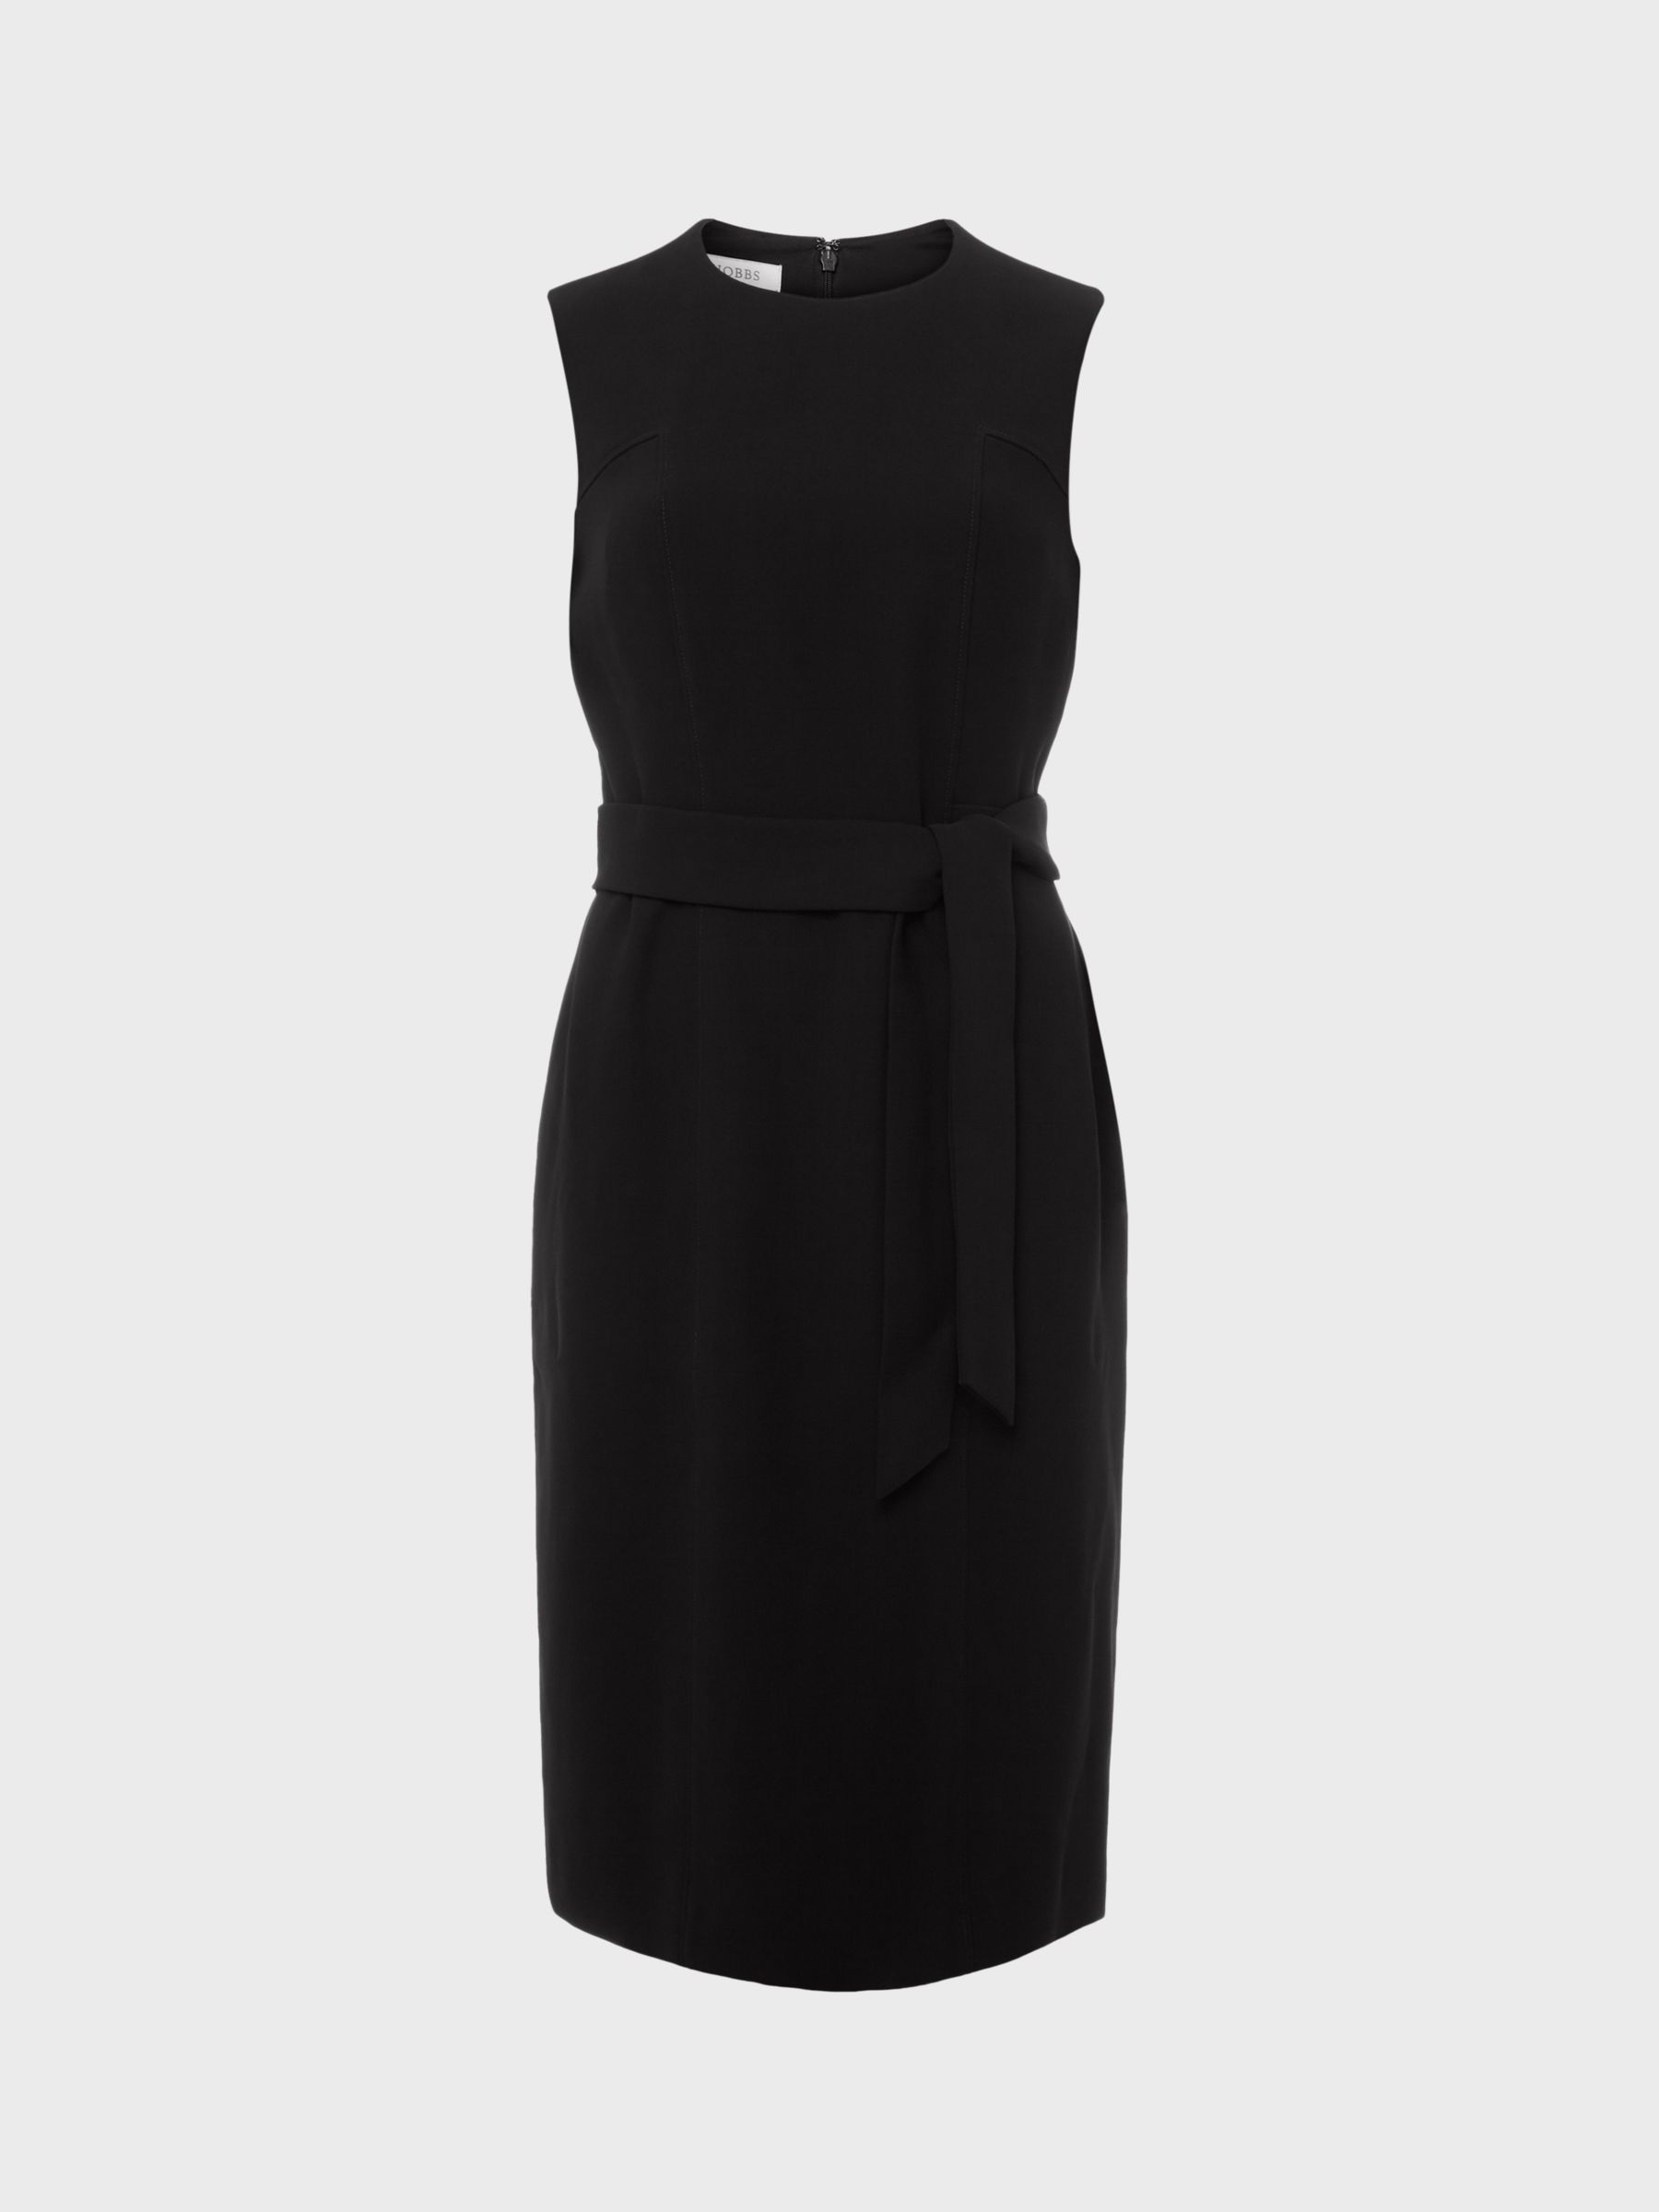 Hobbs Mel Mini Dress, Black, 6